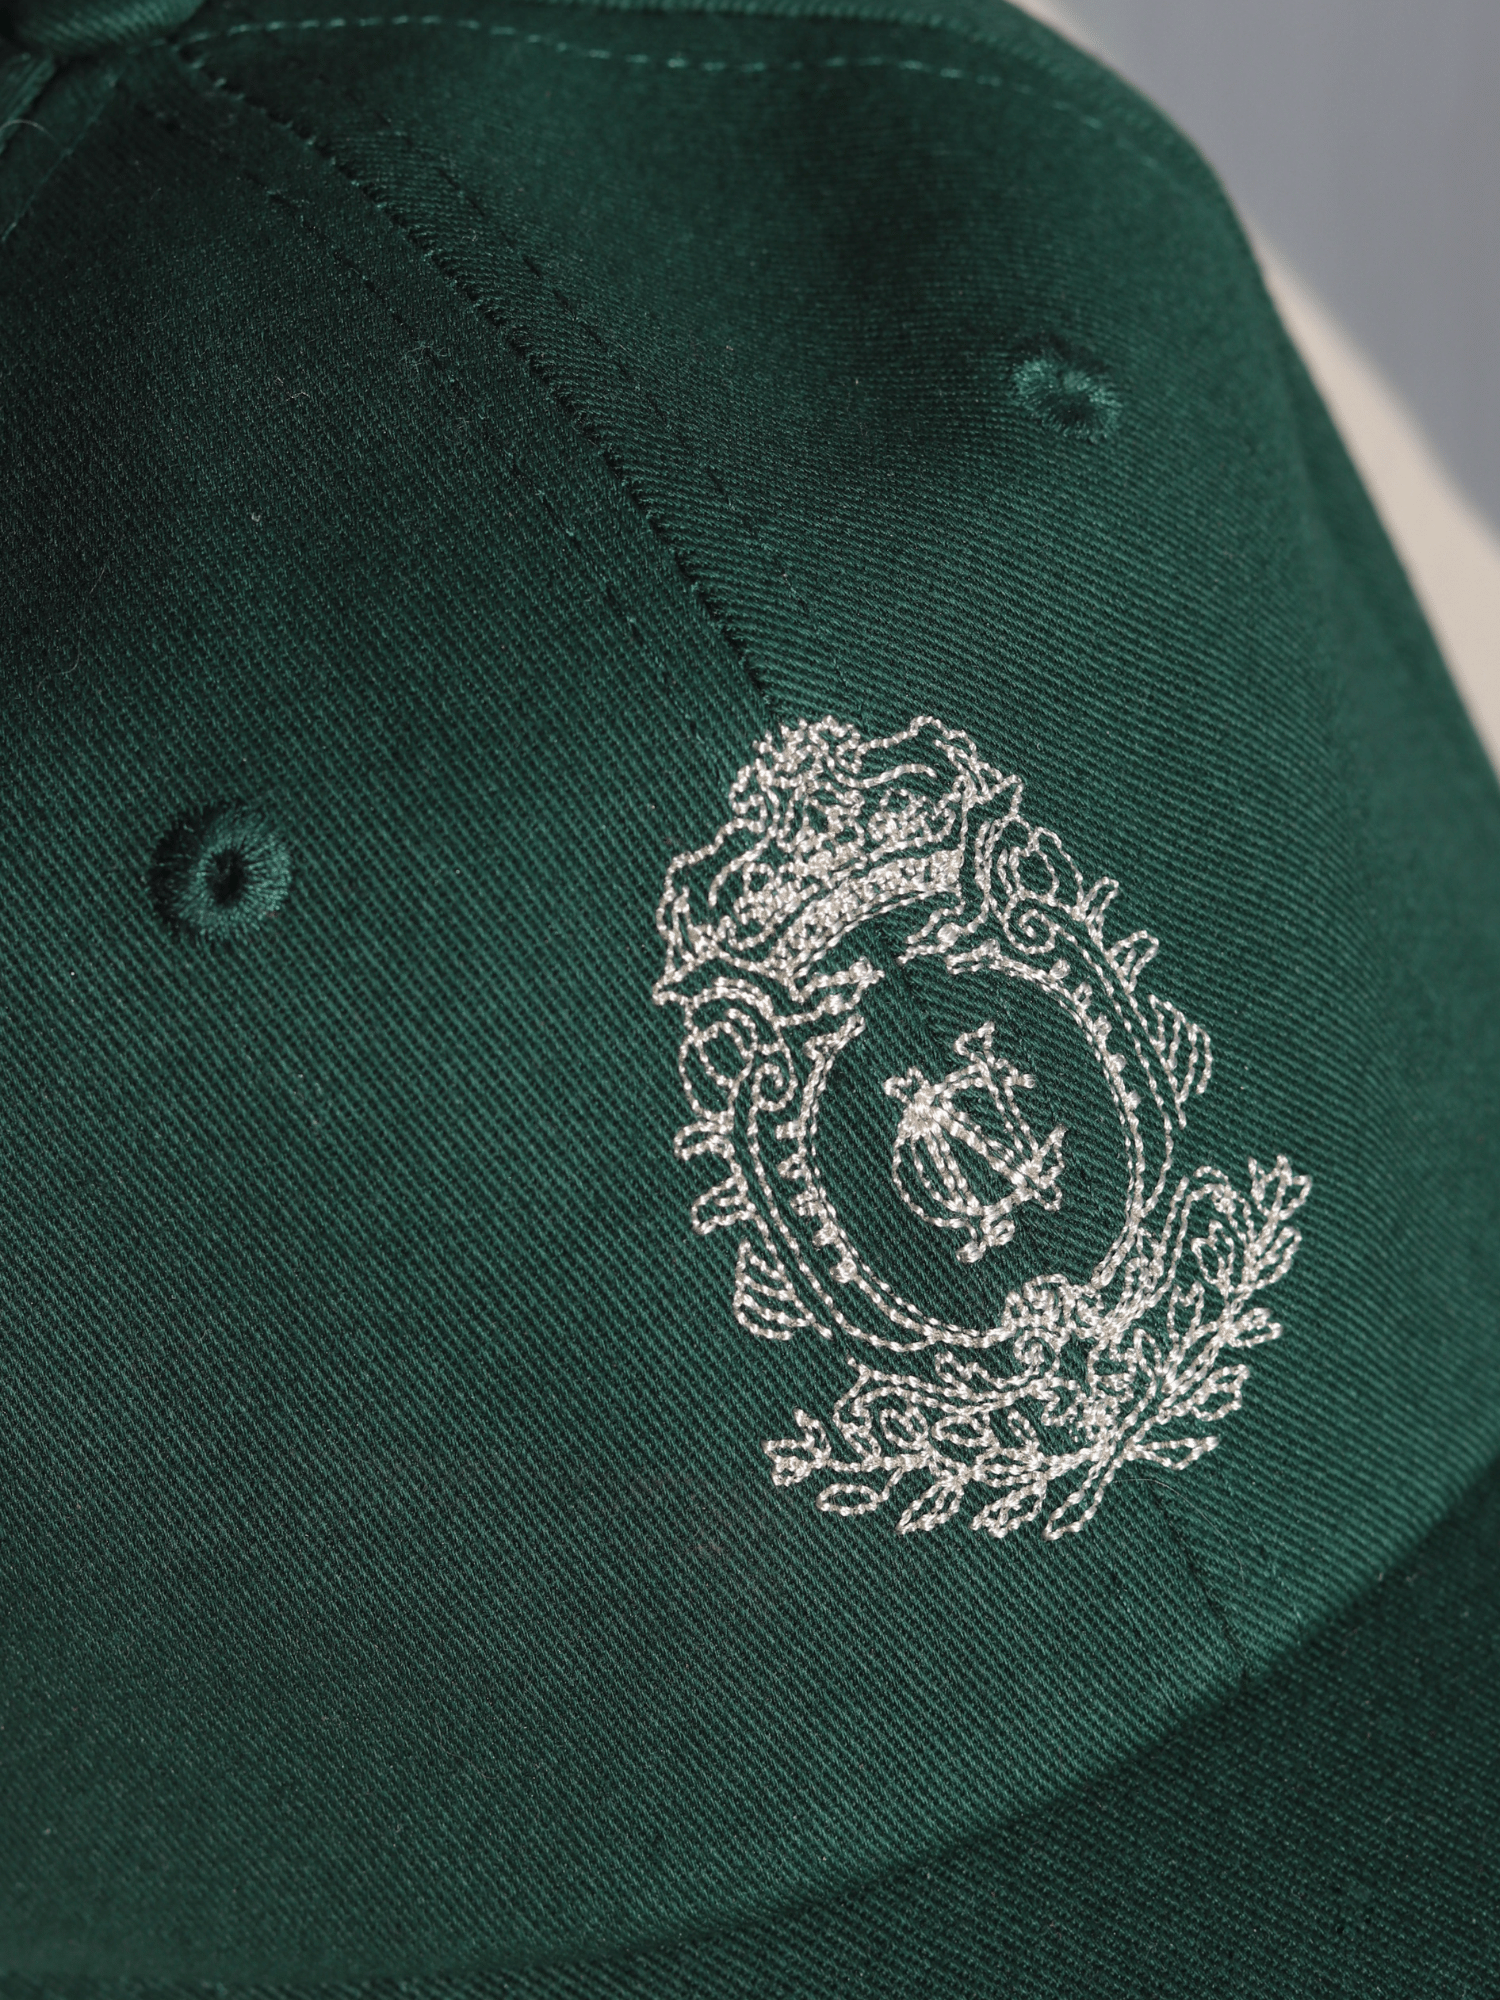 Crested Classic Cap - Wimbledon Green